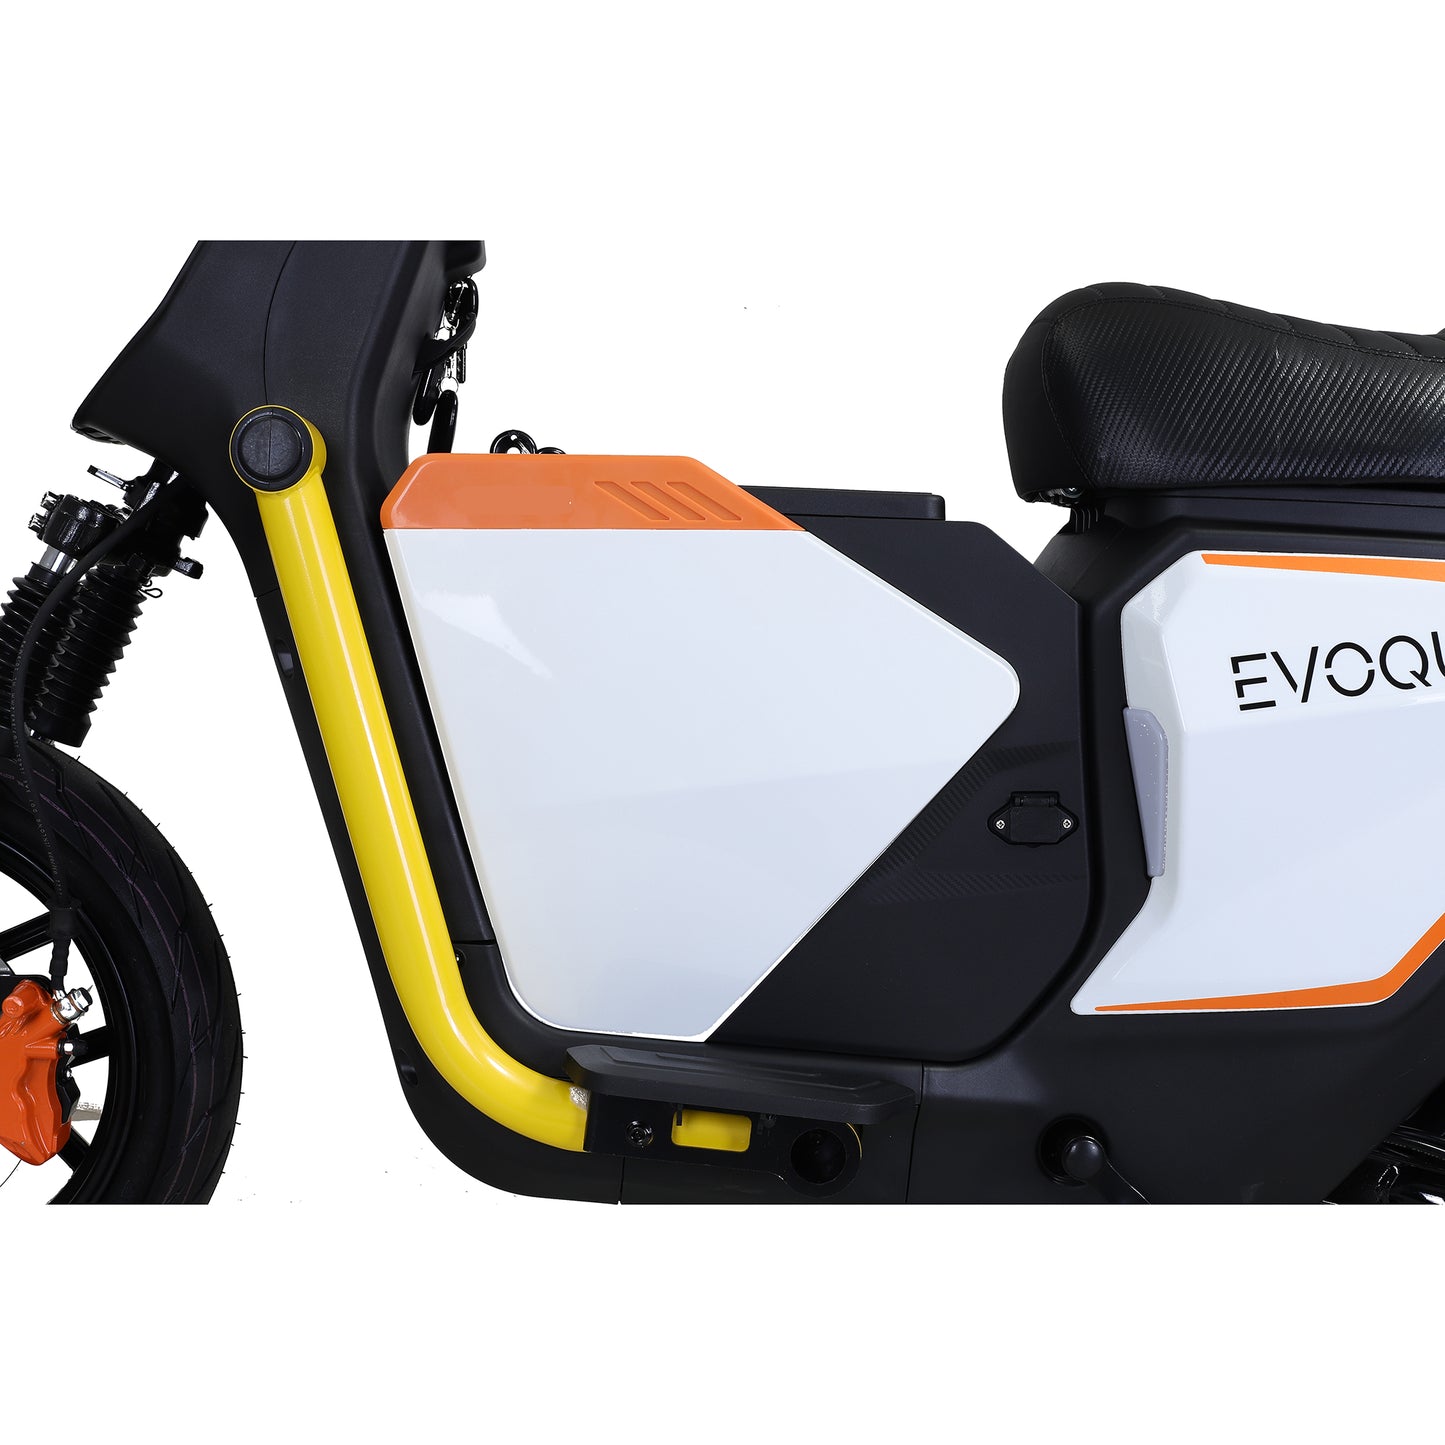 Evoque Stinger | Scooter Style E-Bikes